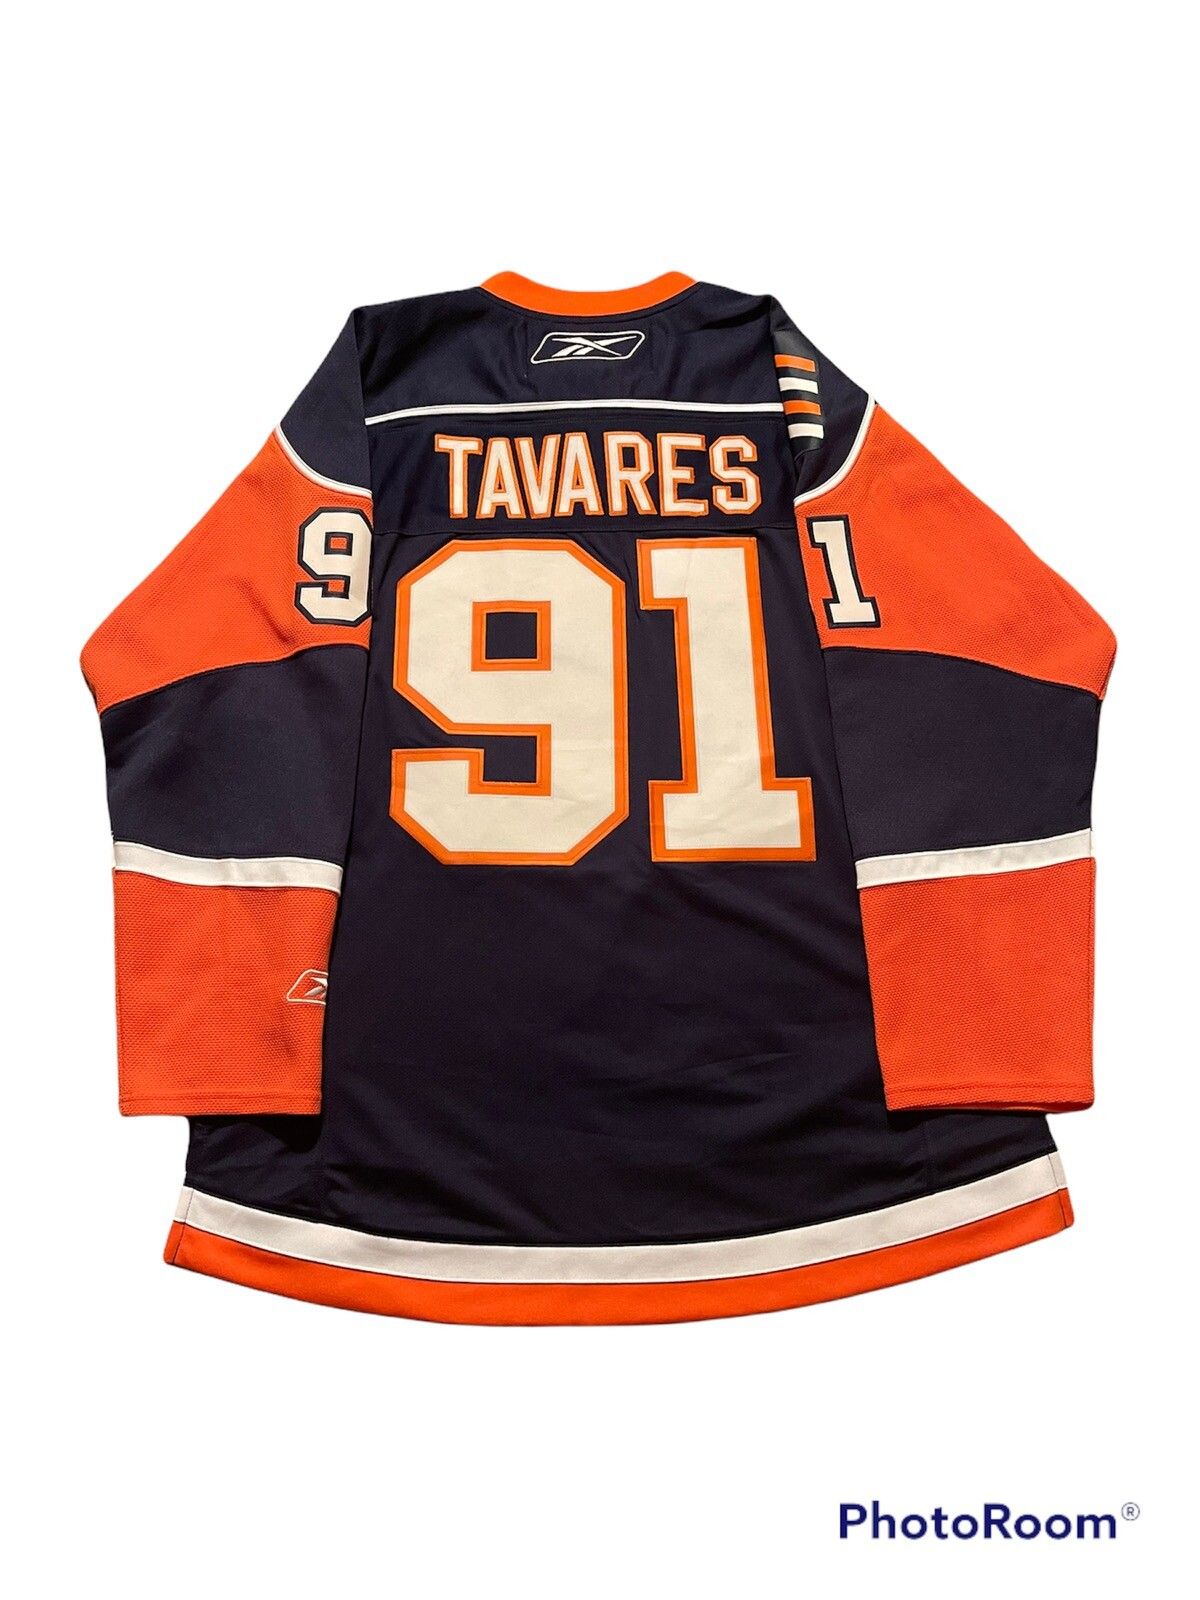 Vintage New York Islanders John Tavares #91 Hockey Jersey Large Size US L / EU 52-54 / 3 - 2 Preview